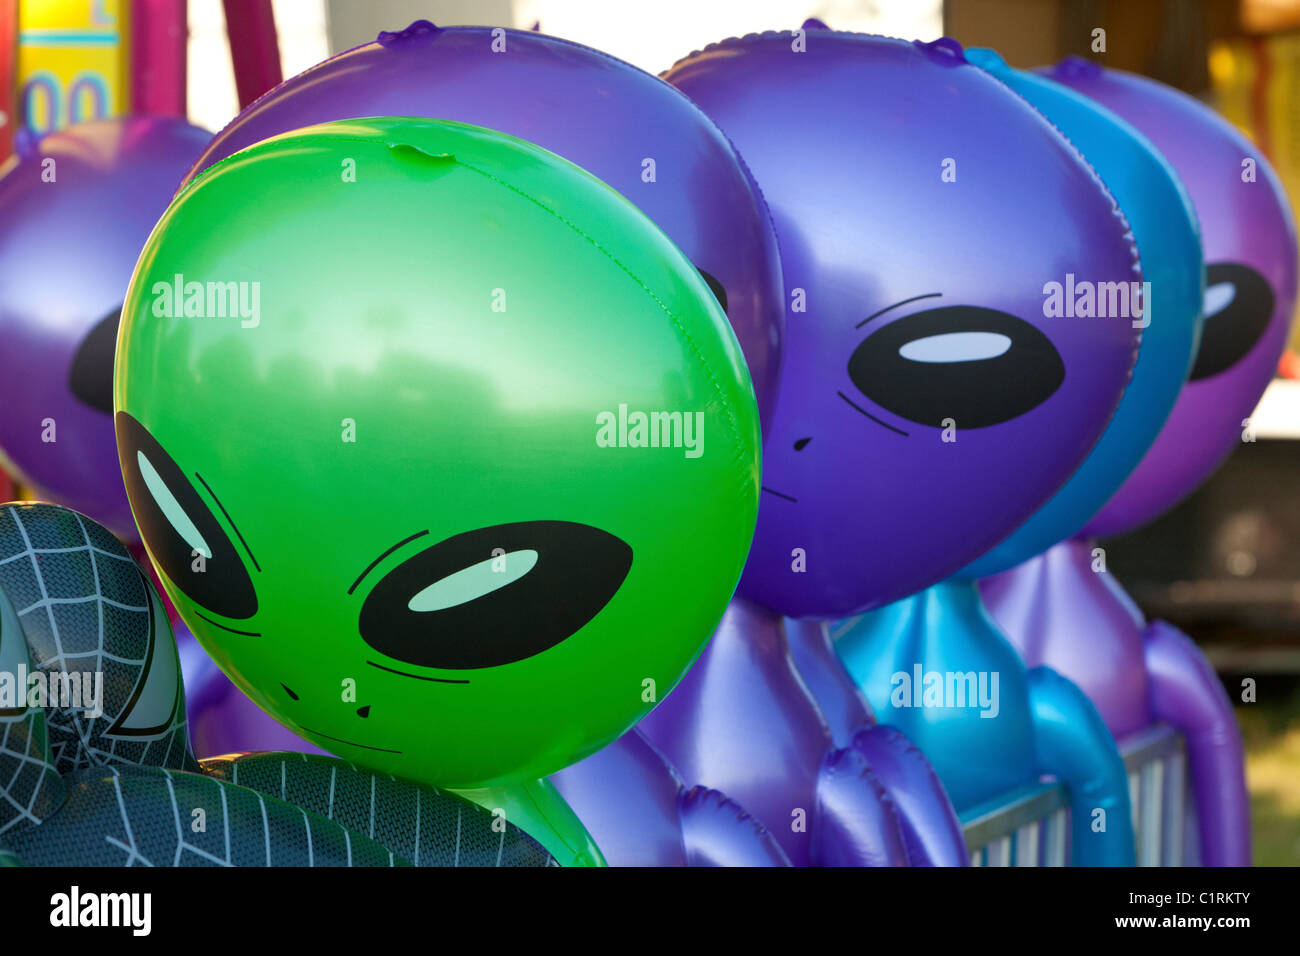 Giant inflatable aliens. Stock Photo